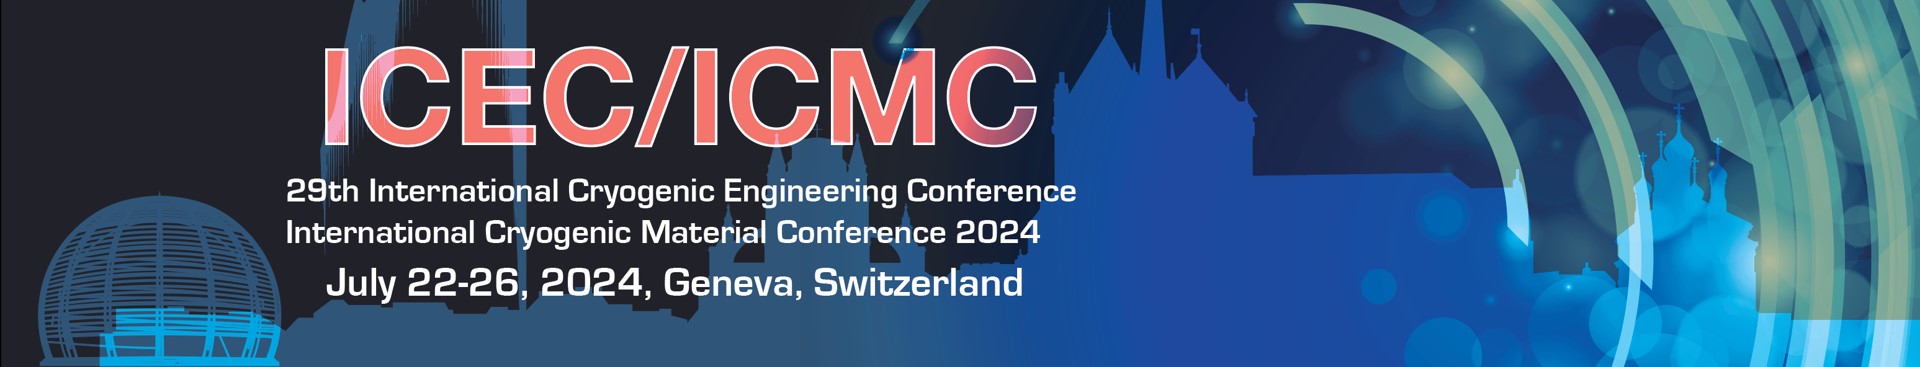 28th International Cryogenic Engineering Conference and International Cryogenic Materials Conference 2024